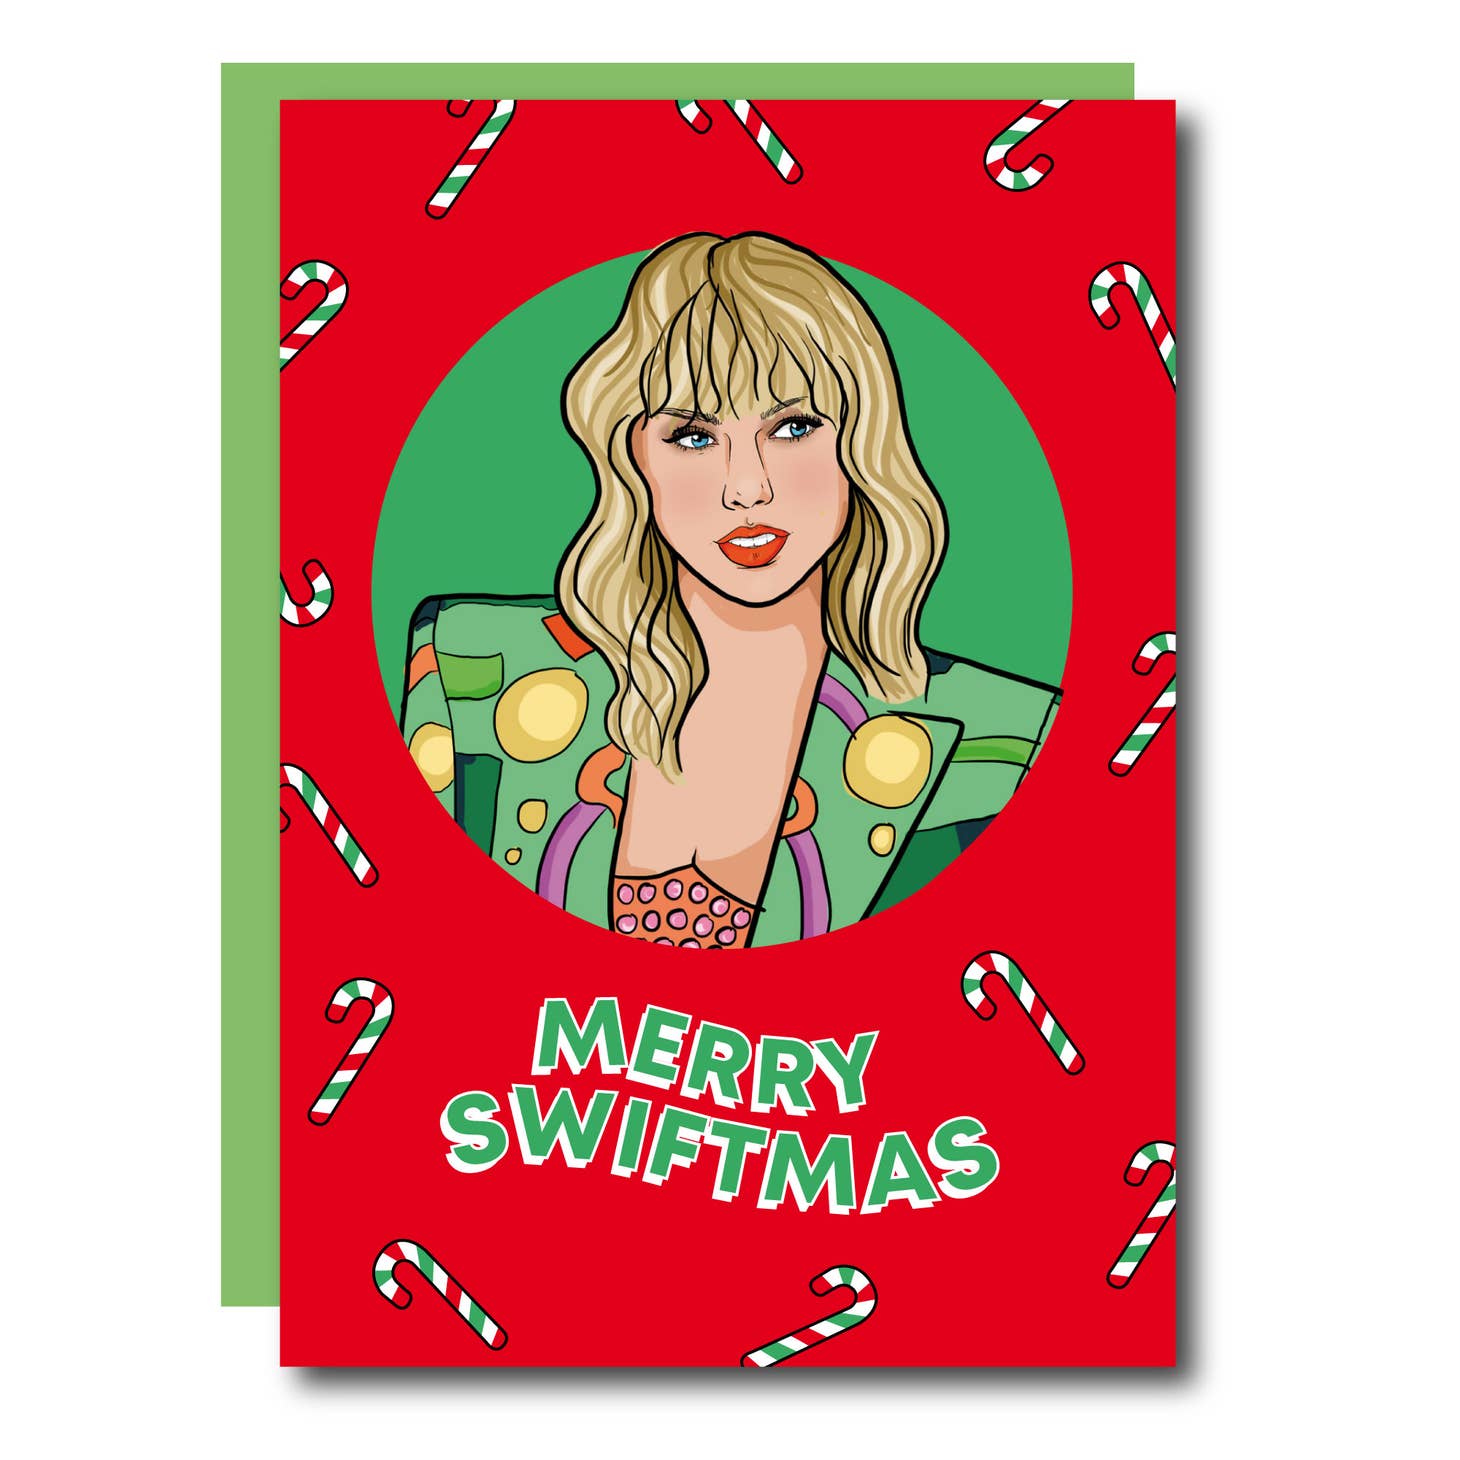 Taylor Swift “Merry Swiftmas” Card